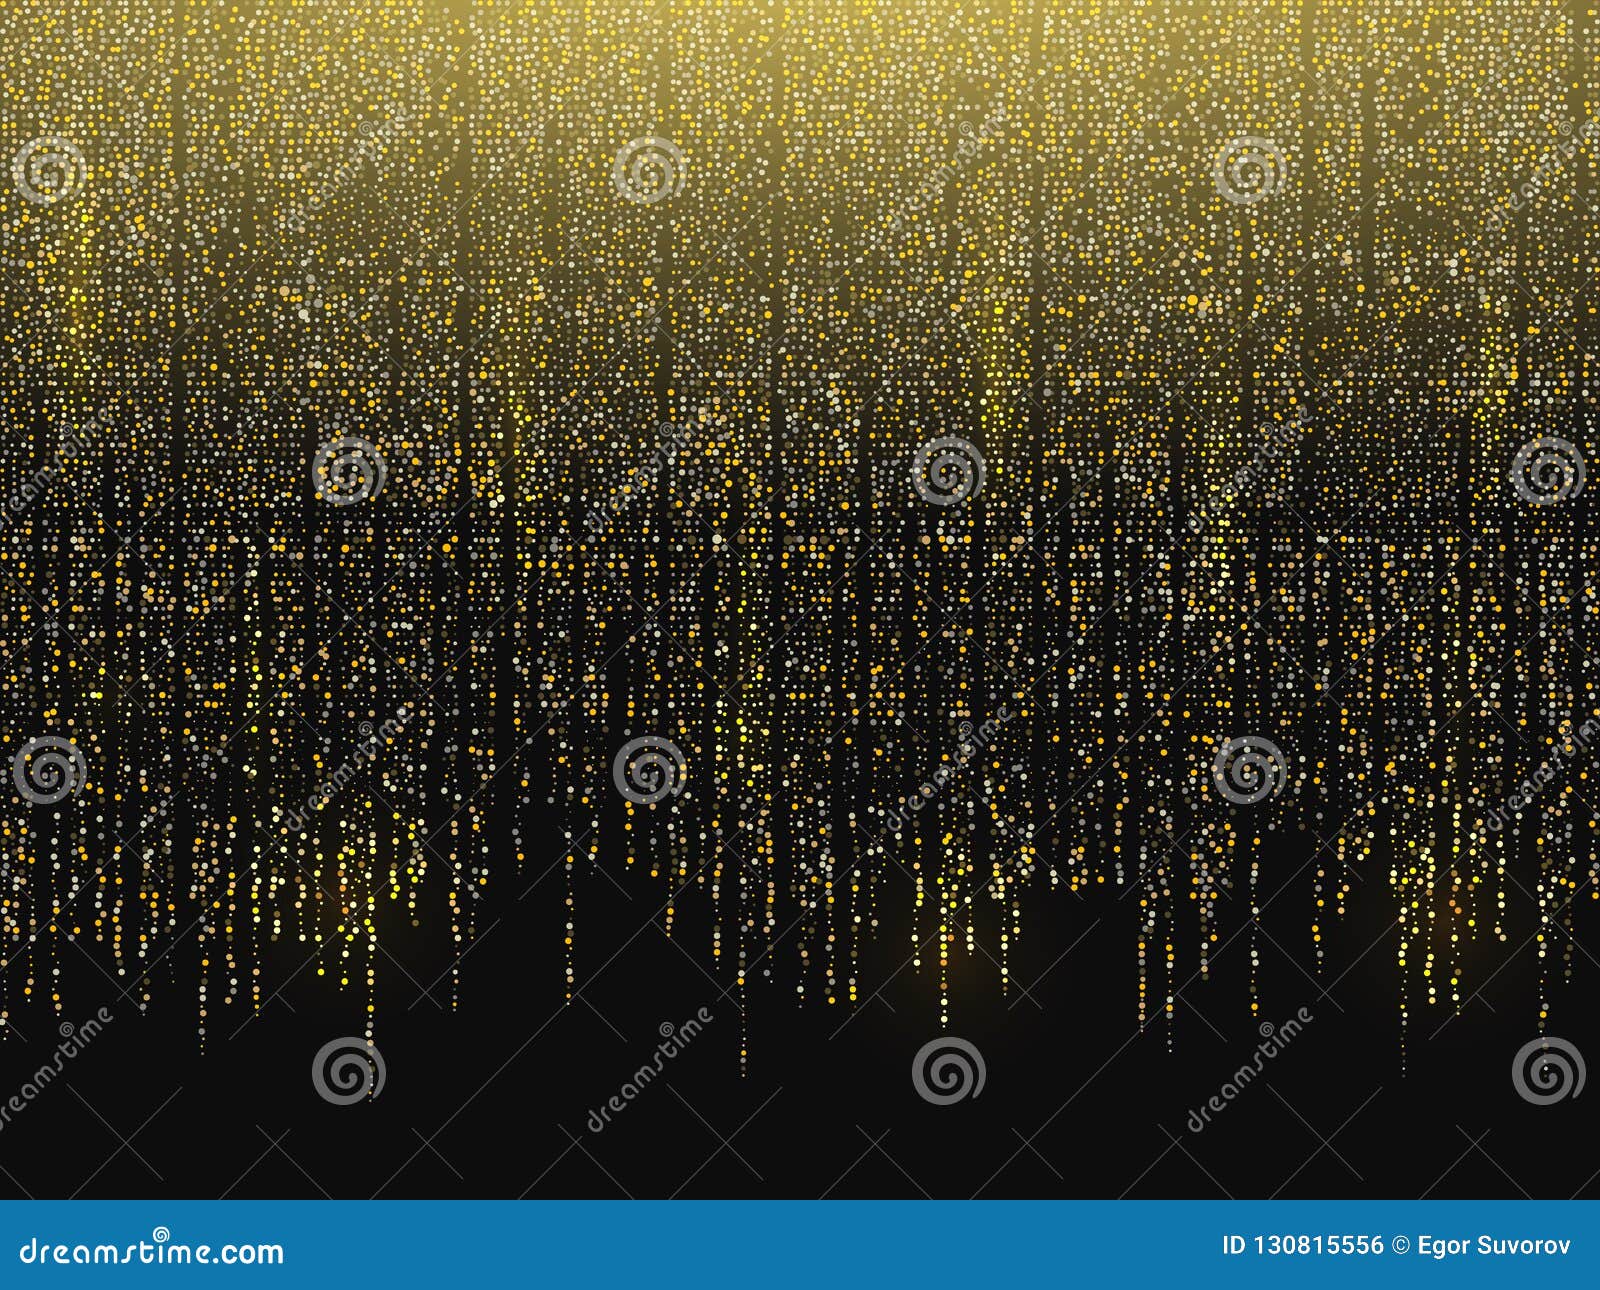 glitter background. gold garlands falling down. christmas background. golden sparks on a black backdrop. luxury